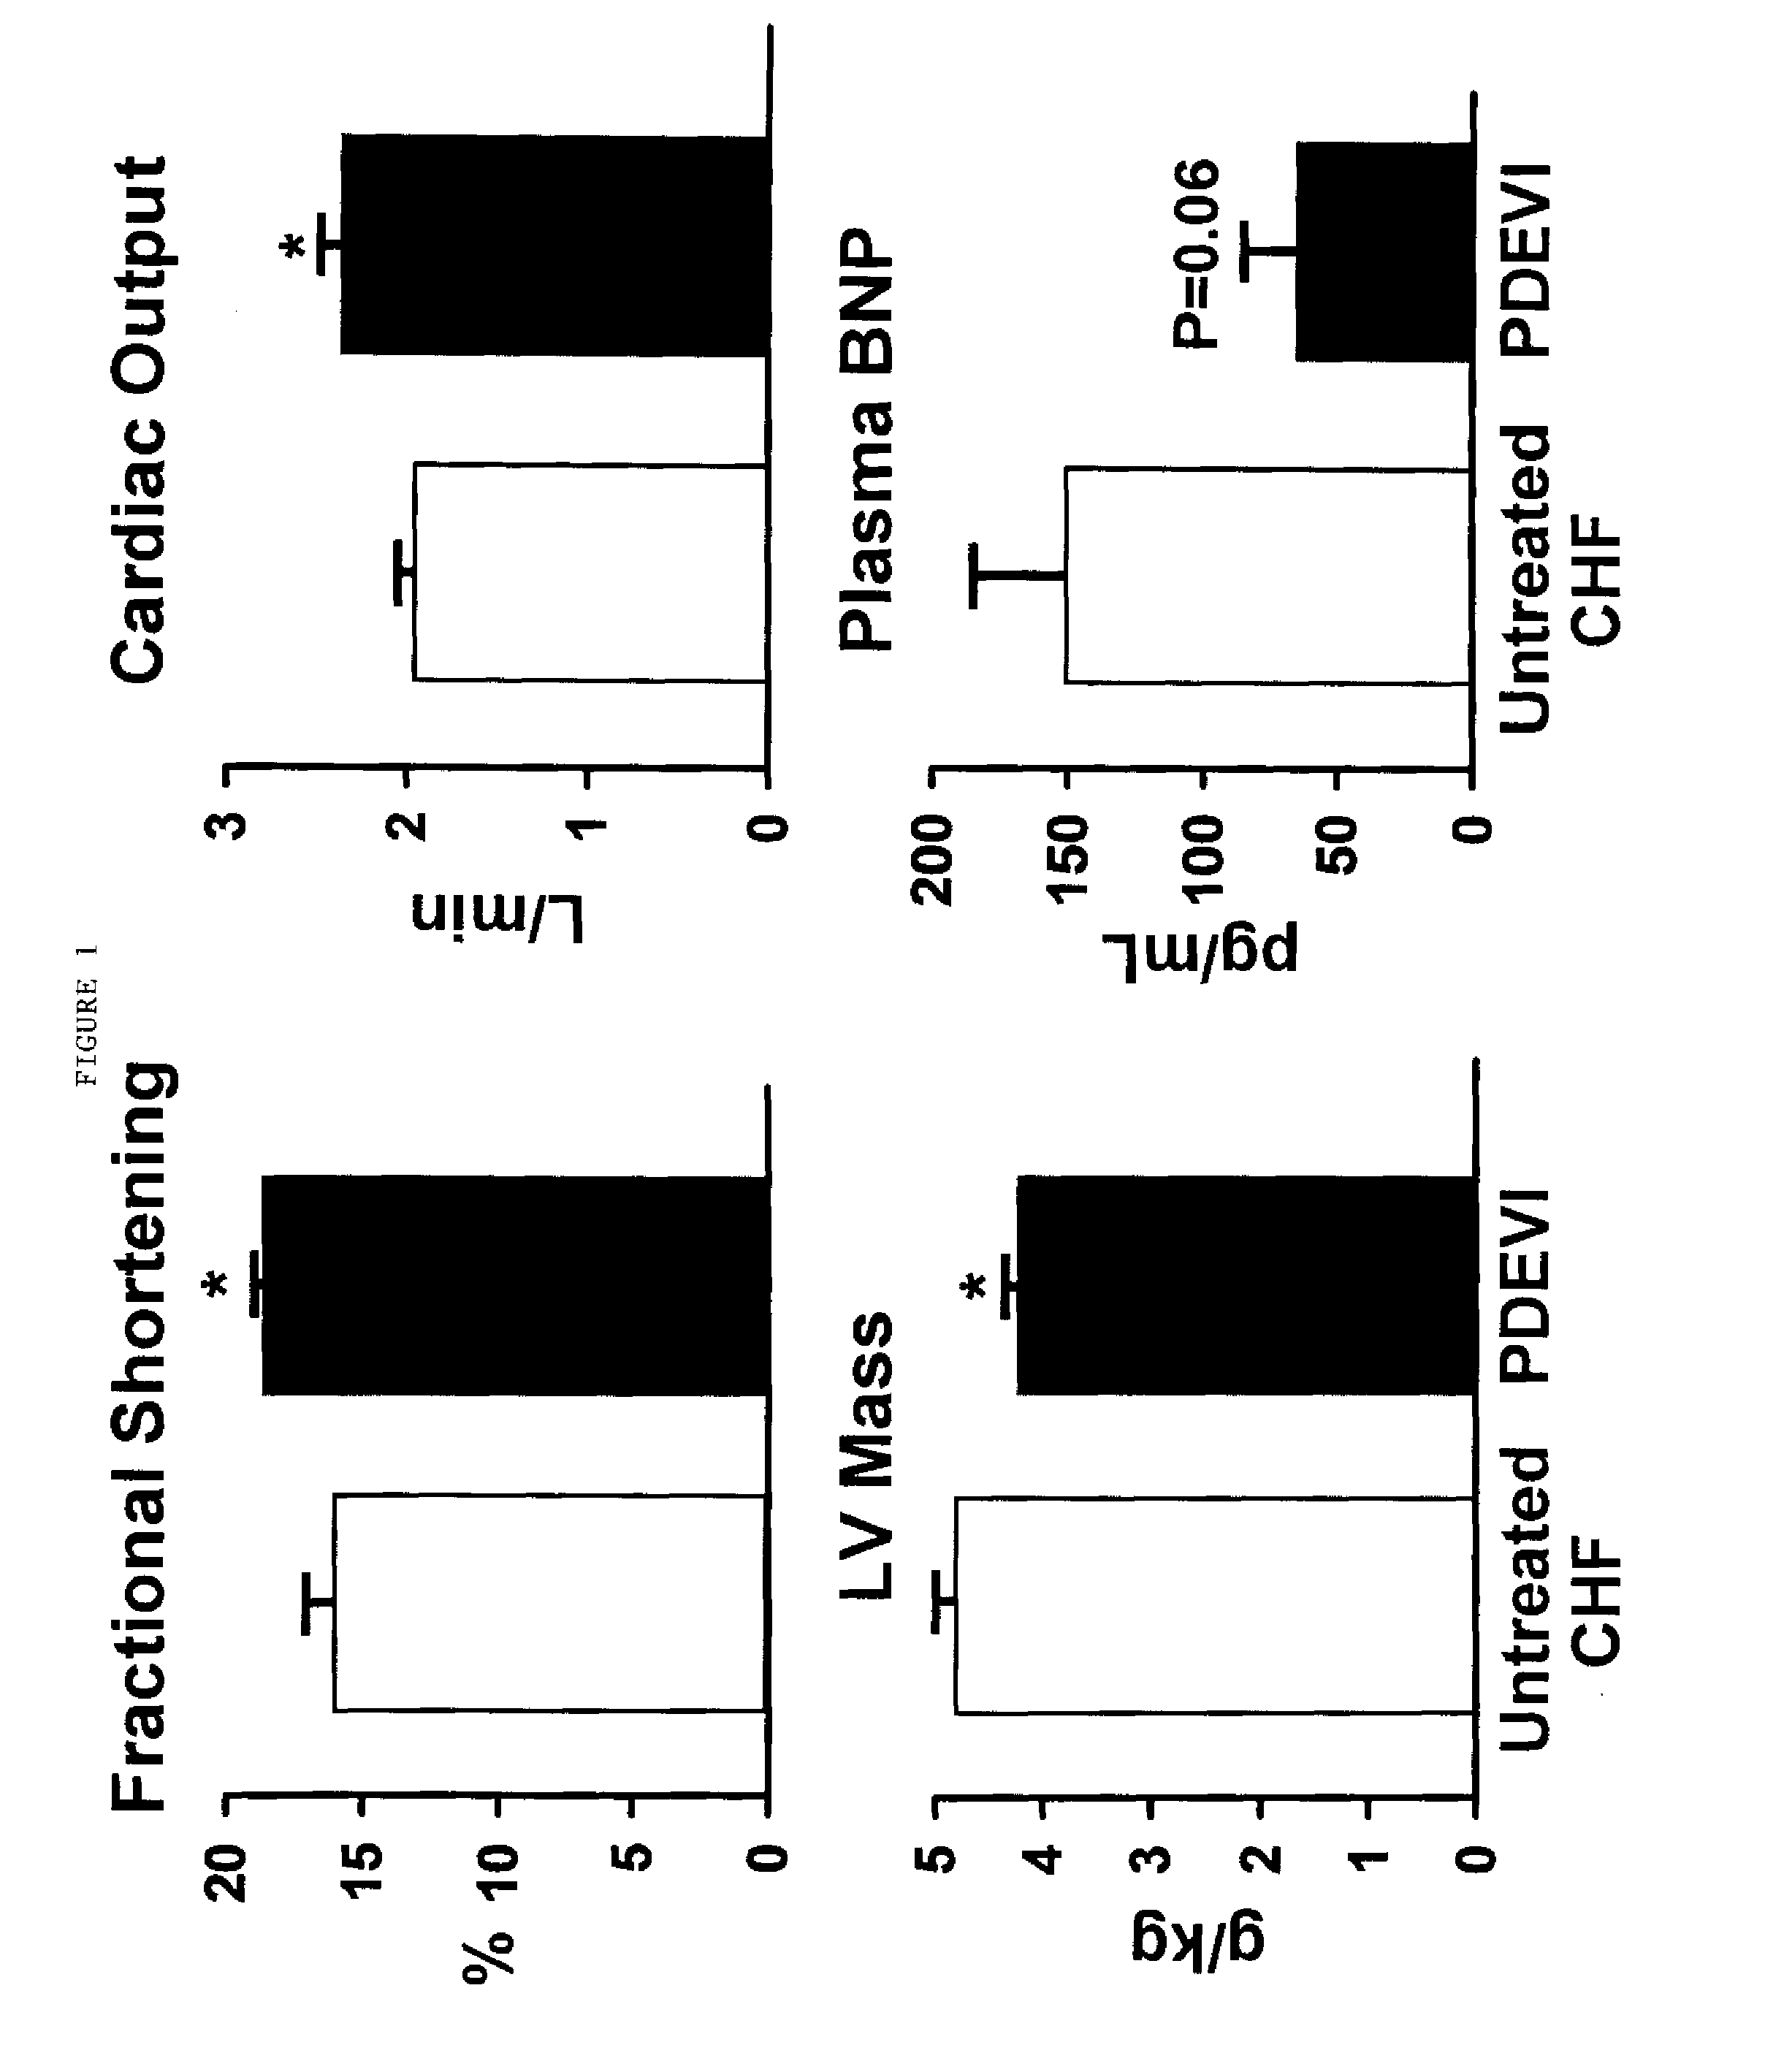 Type v phosphodiesterase inhibitors and natriuretic polypeptides